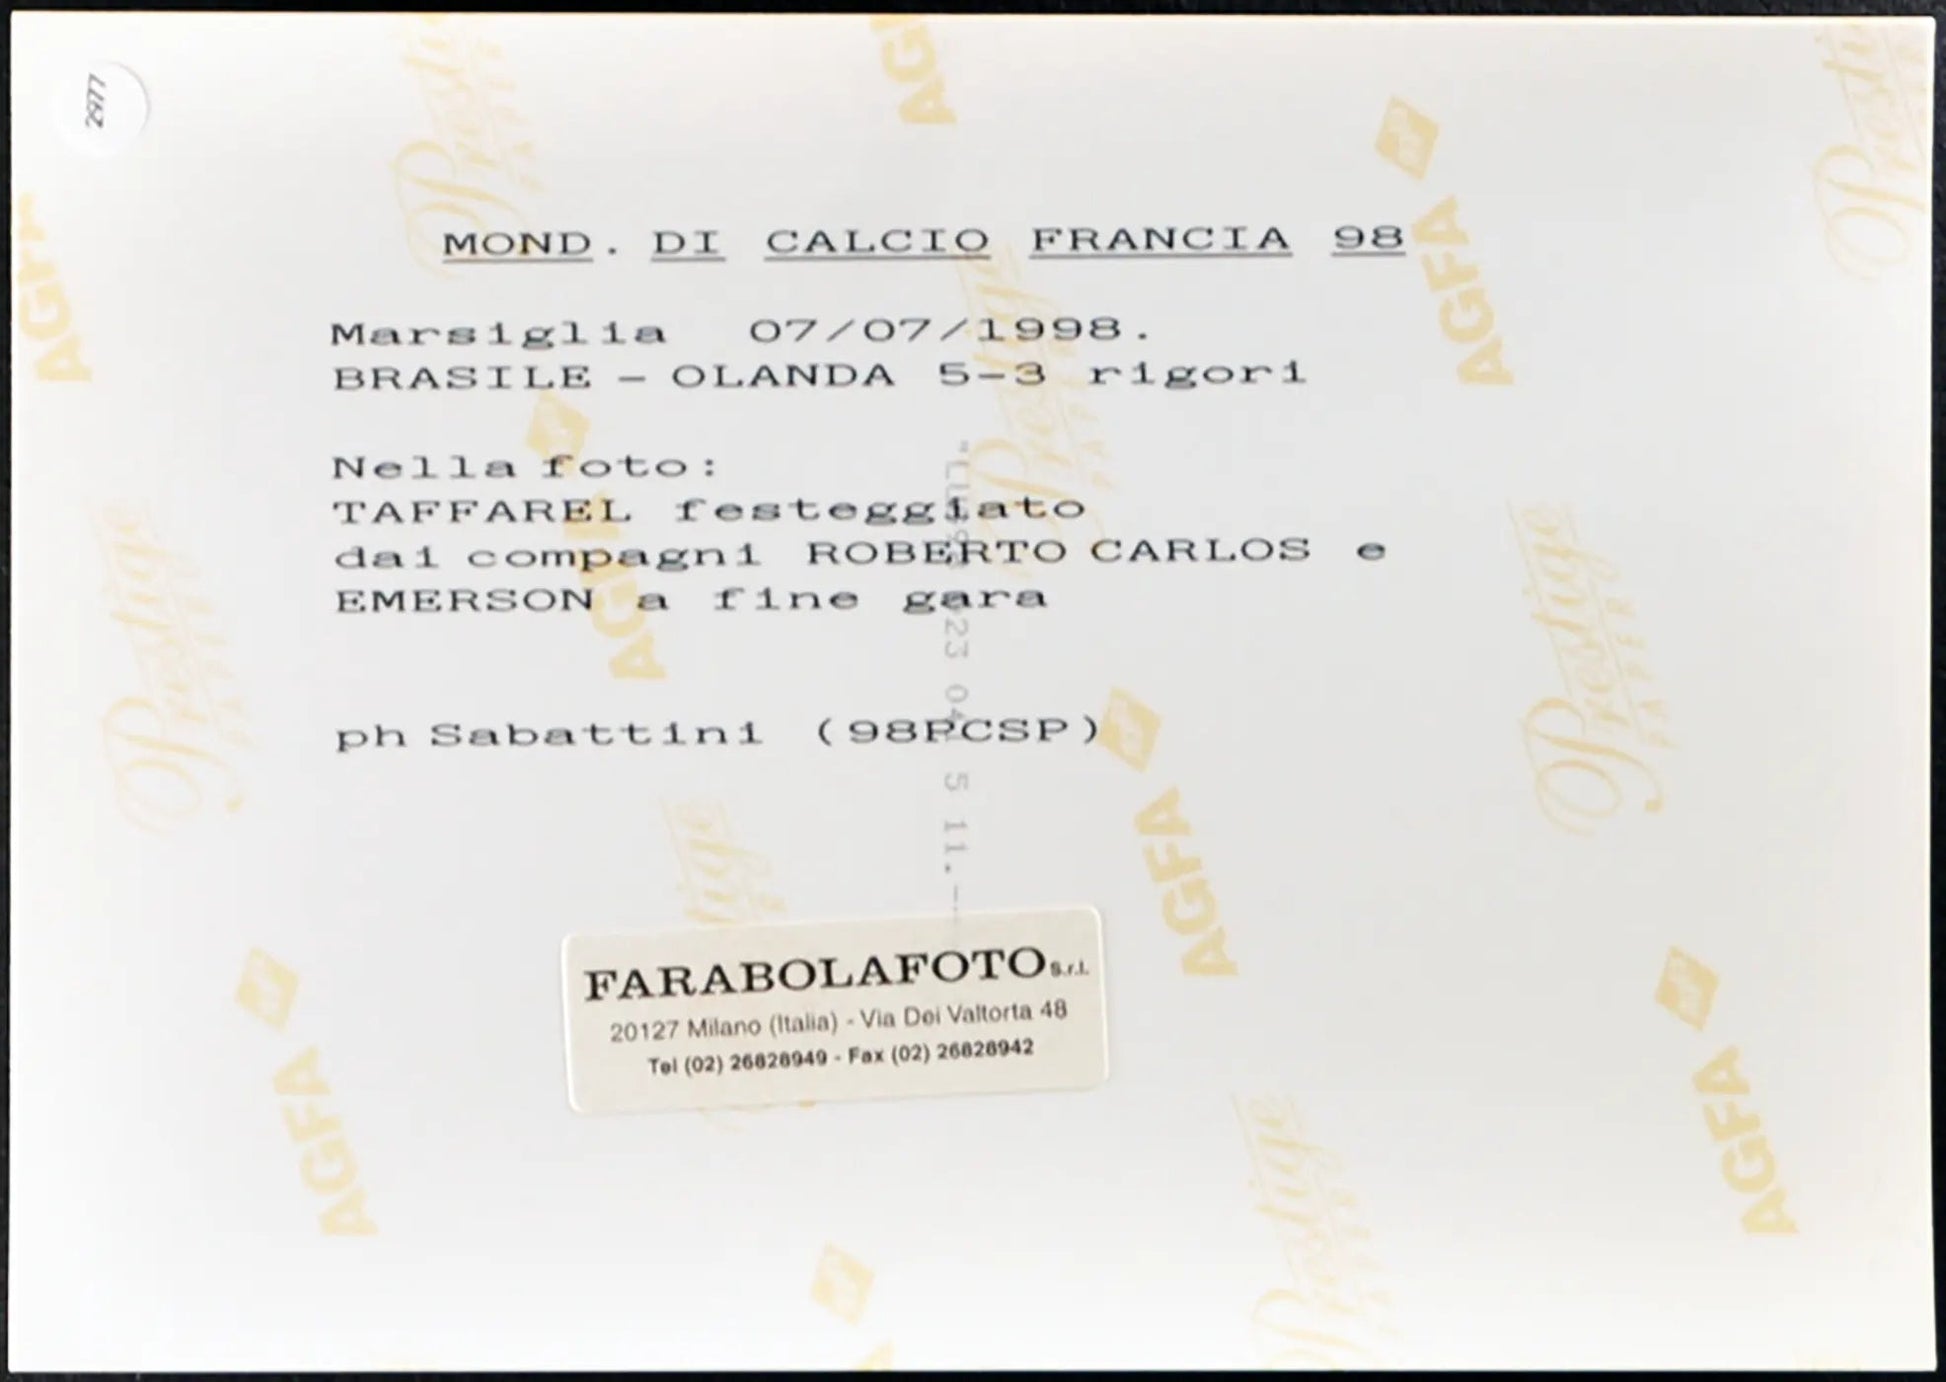 Taffarel Mondiali Francia 98 Ft 2977 - Stampa 20x15 cm - Farabola Stampa ai sali d'argento